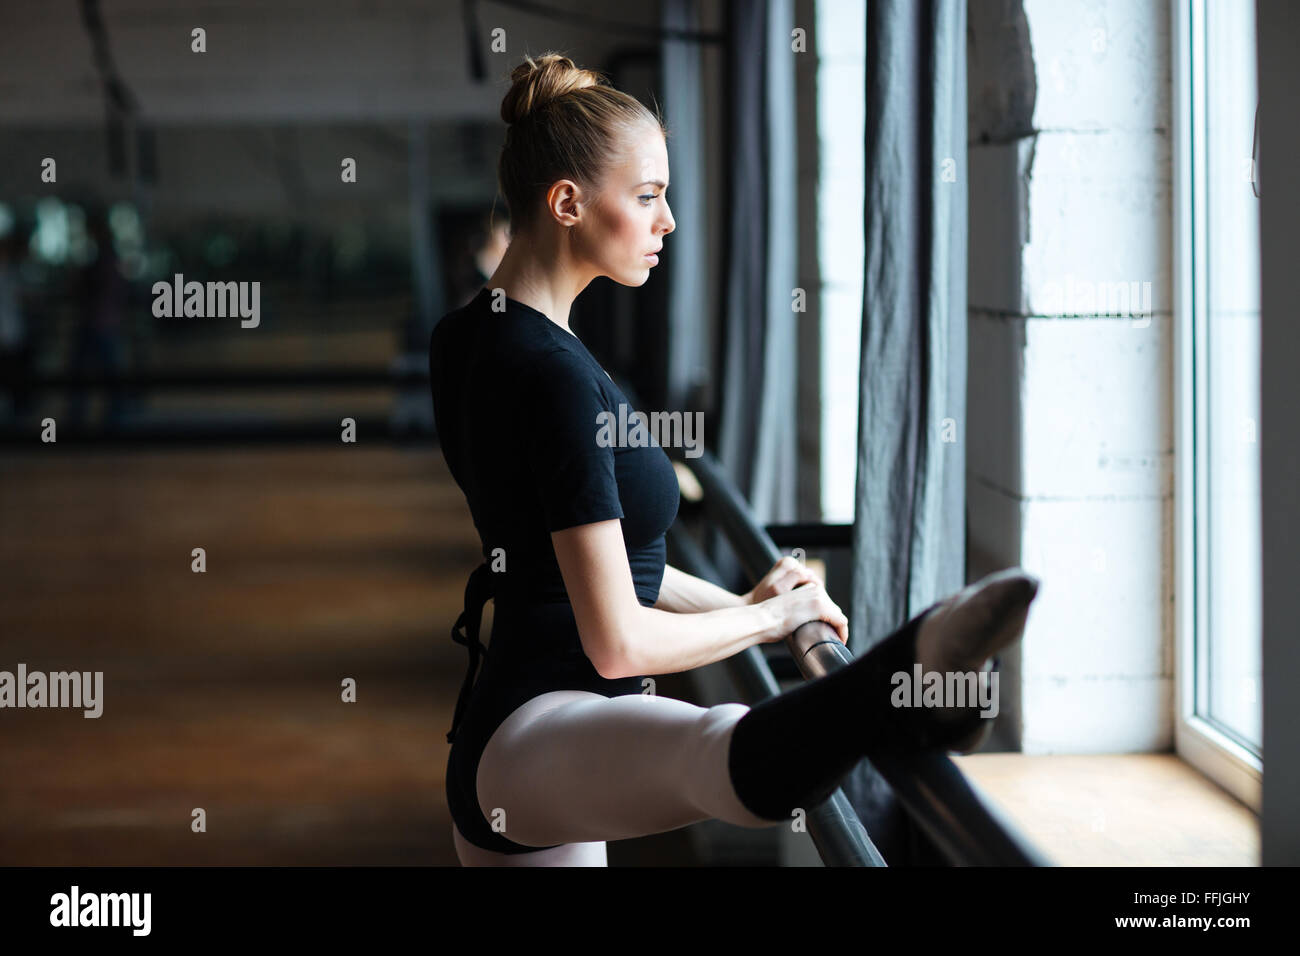 Attractive ballerina stretching leg in ballet class Stock Photo